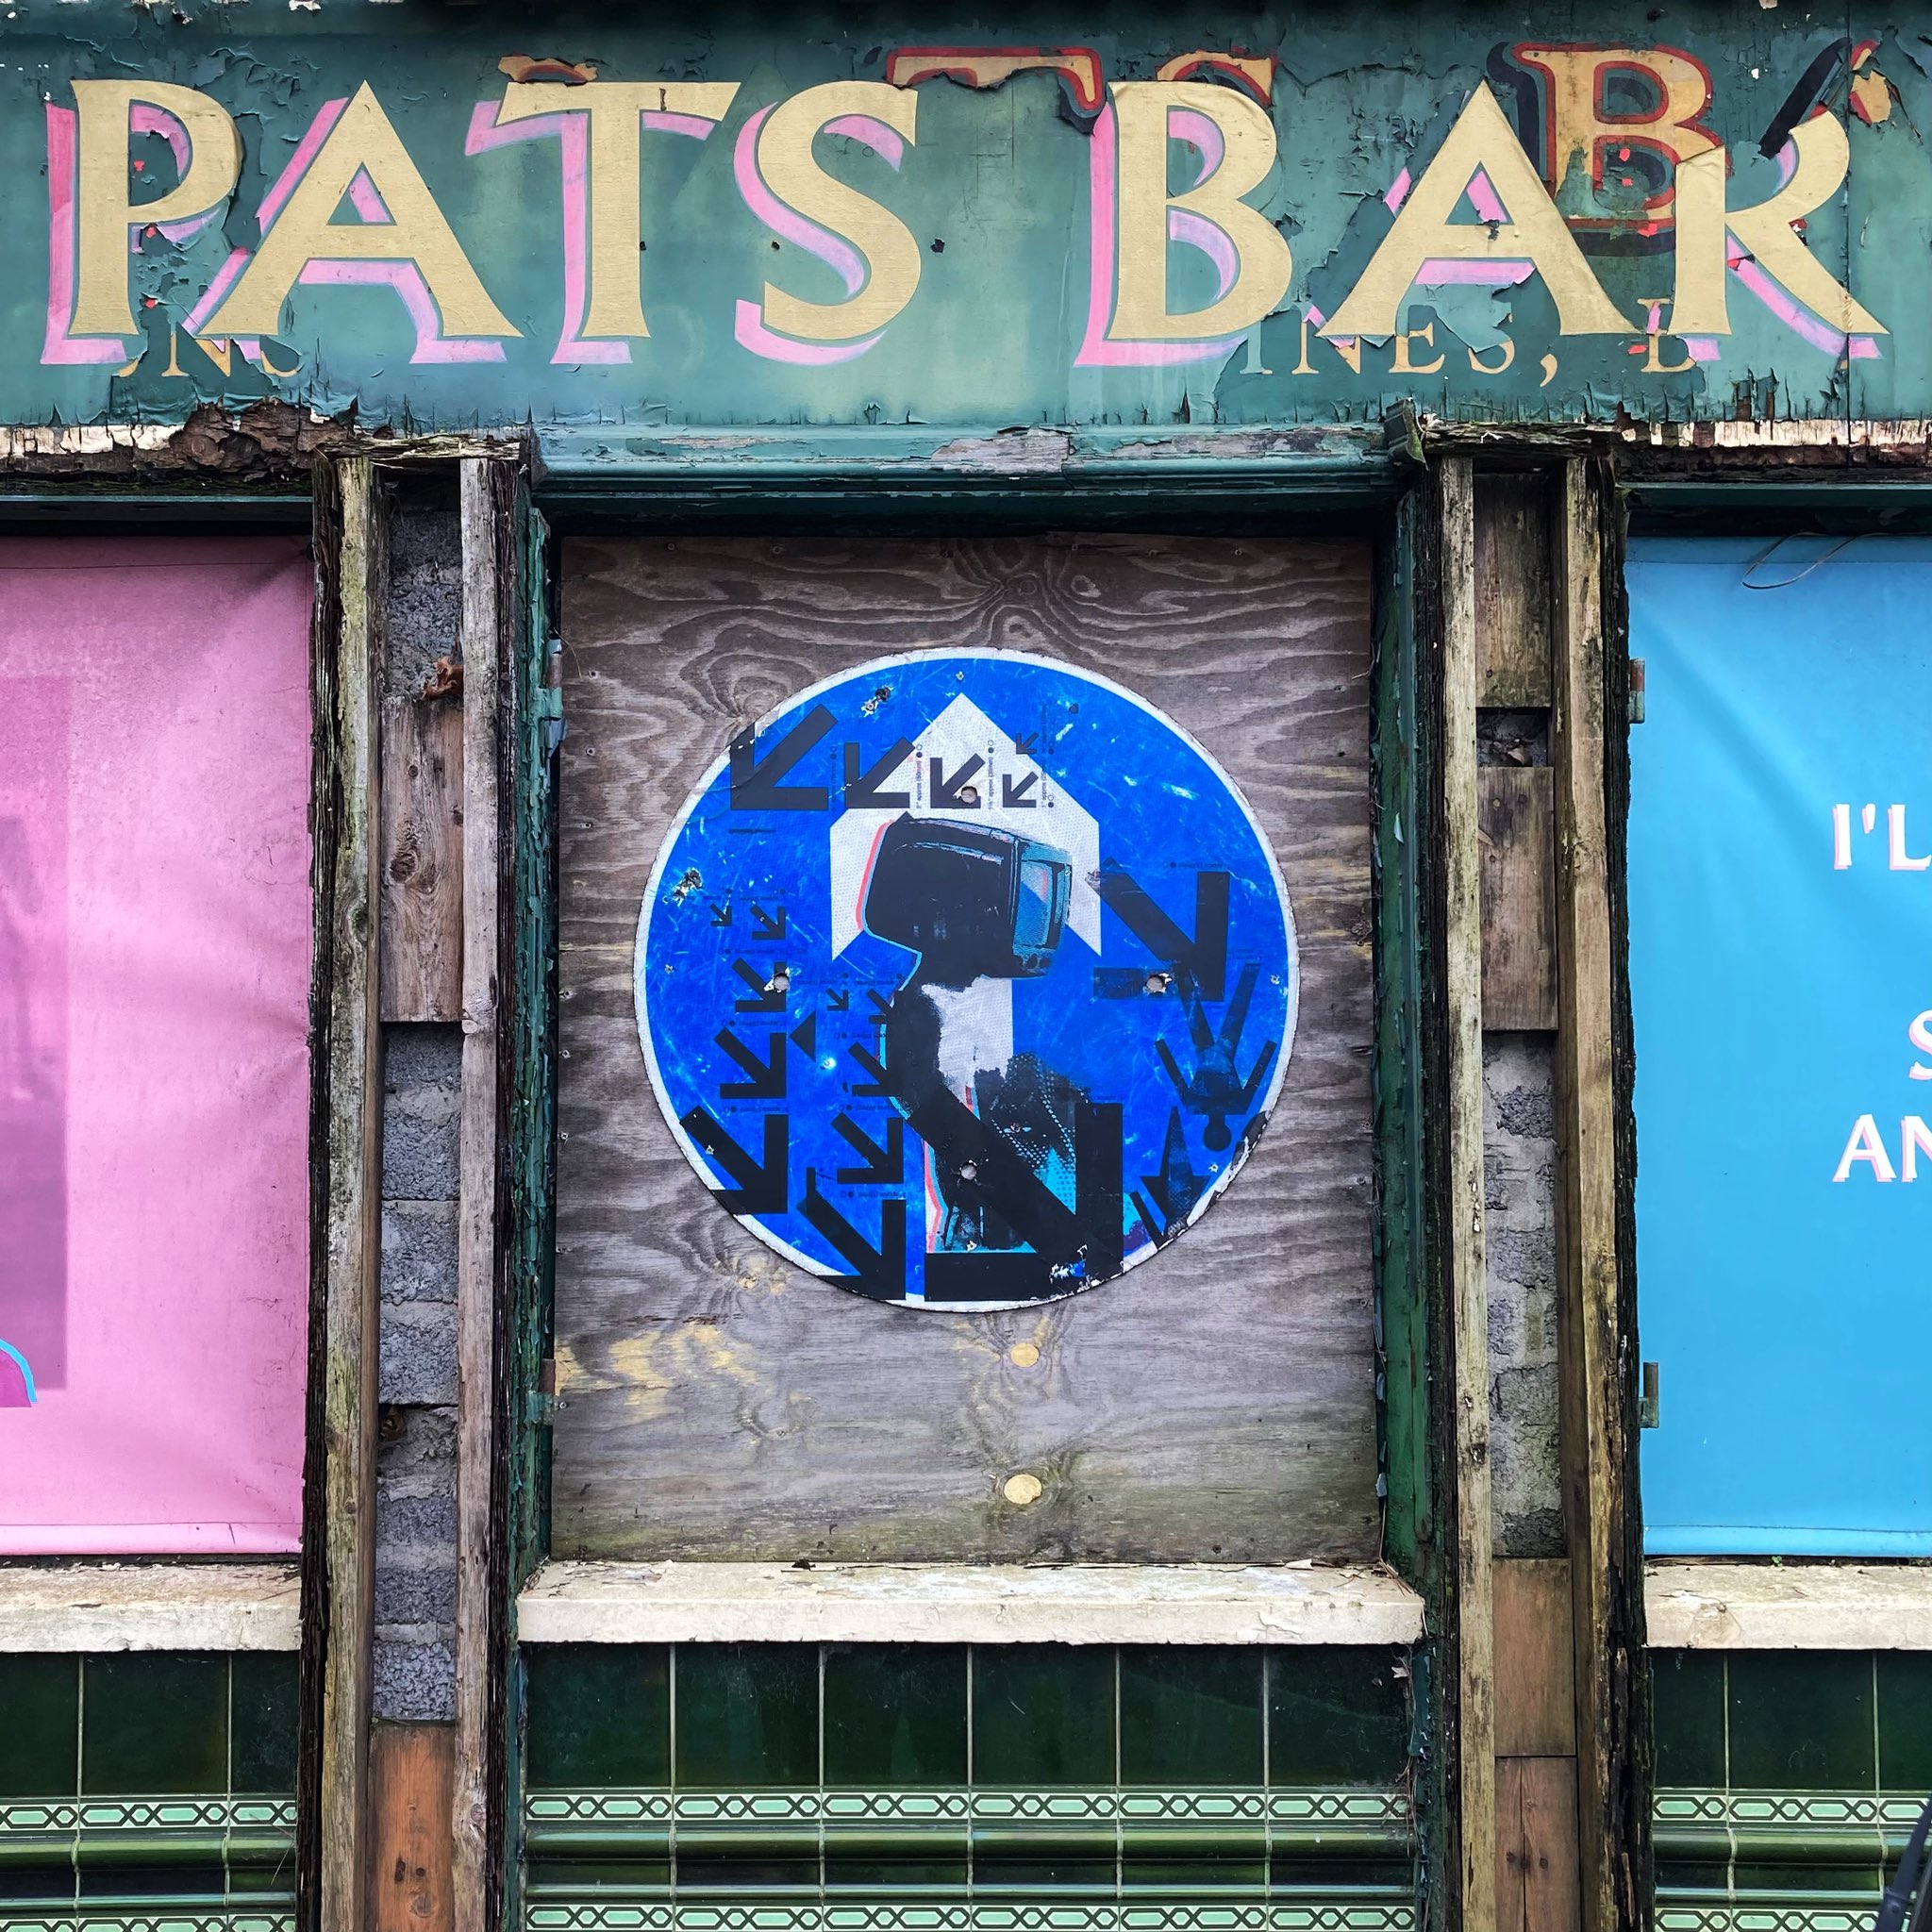 #LEOBOYD in Sailortown, Belfast. #belfast #streetart #belfaststreetart #streetartni #printmaking #sign #patsbar #abandoned https://t.co/8aHbr6UkMN